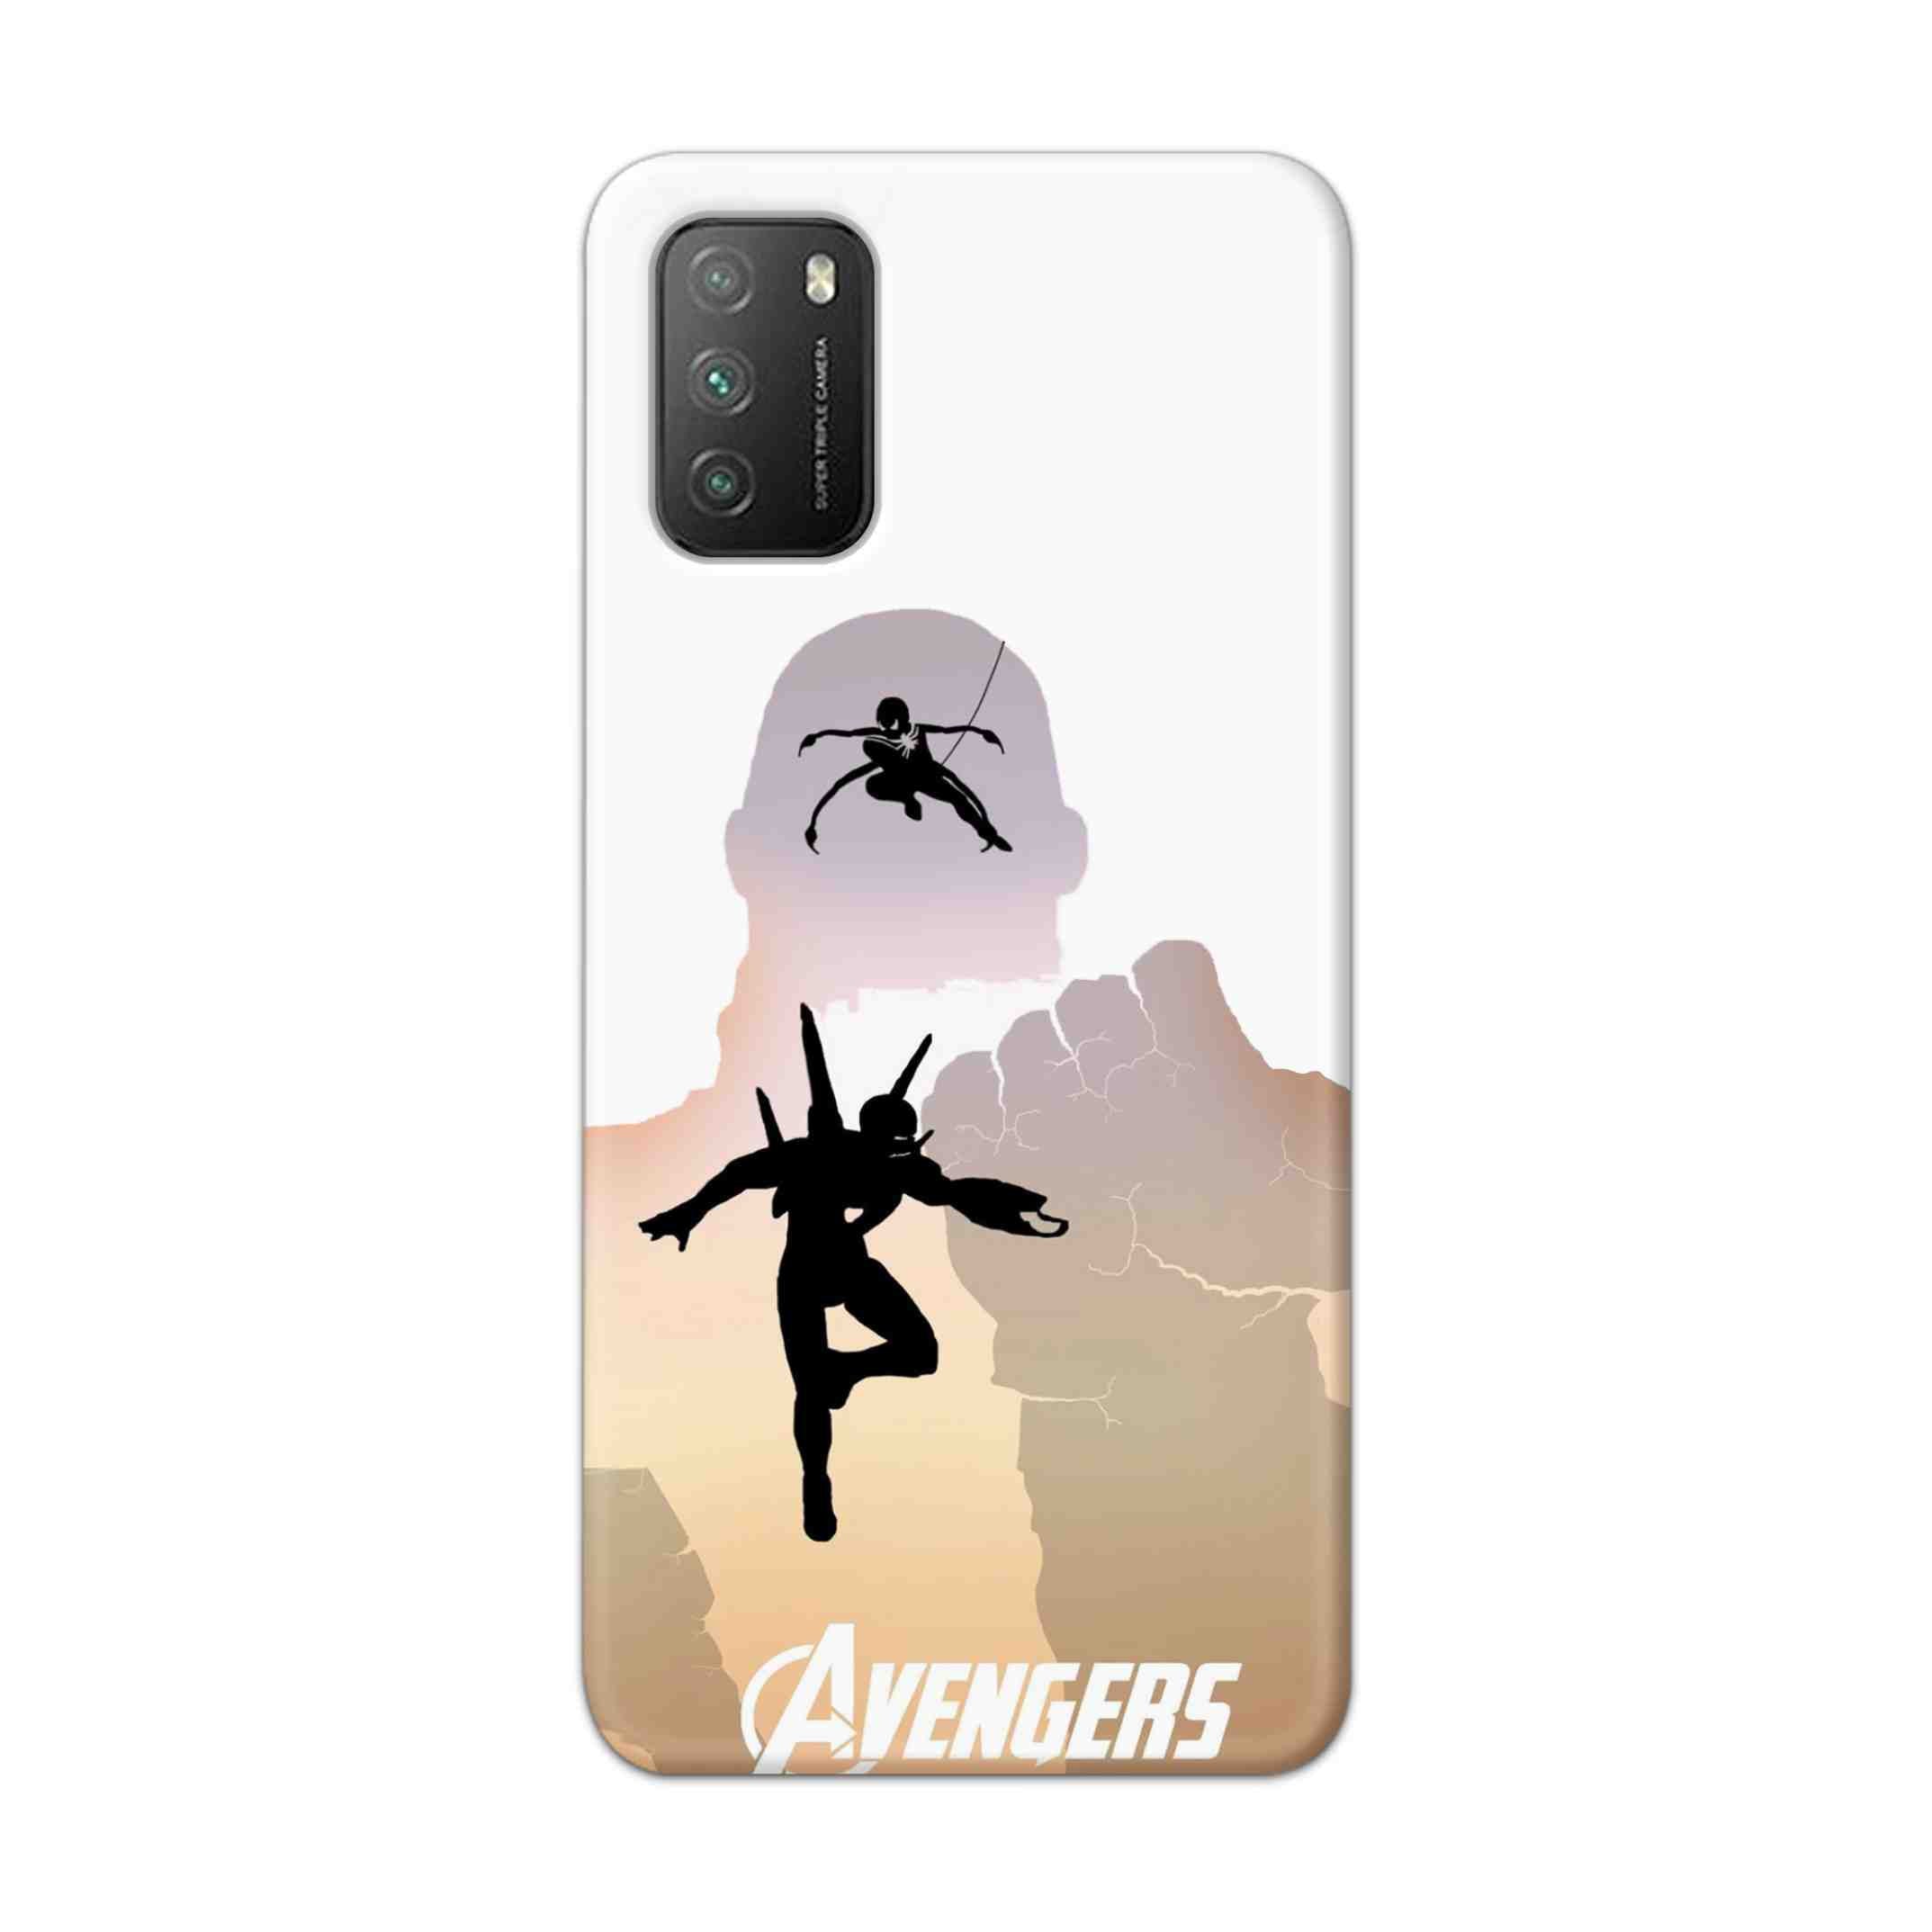 Buy Iron Man Vs Spiderman Hard Back Mobile Phone Case Cover For Poco M3 Online